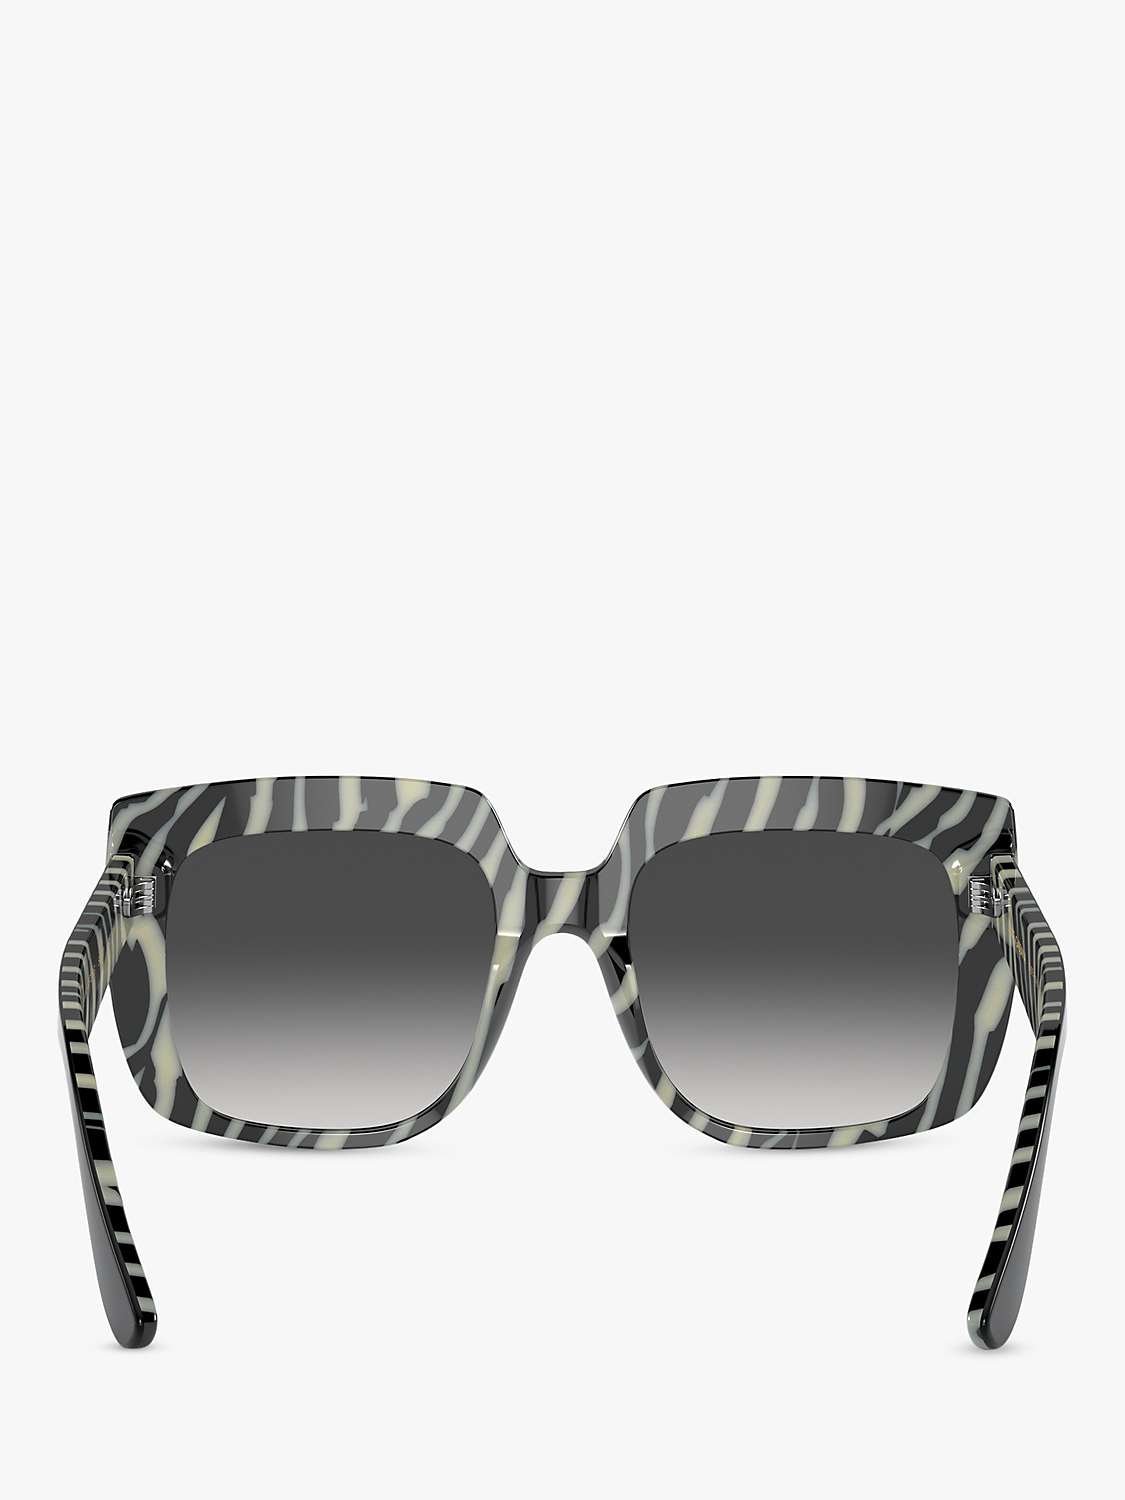 Buy Dolce & Gabbana DG4414 Women's Square Sunglasses, Black/Grey Gradient Online at johnlewis.com